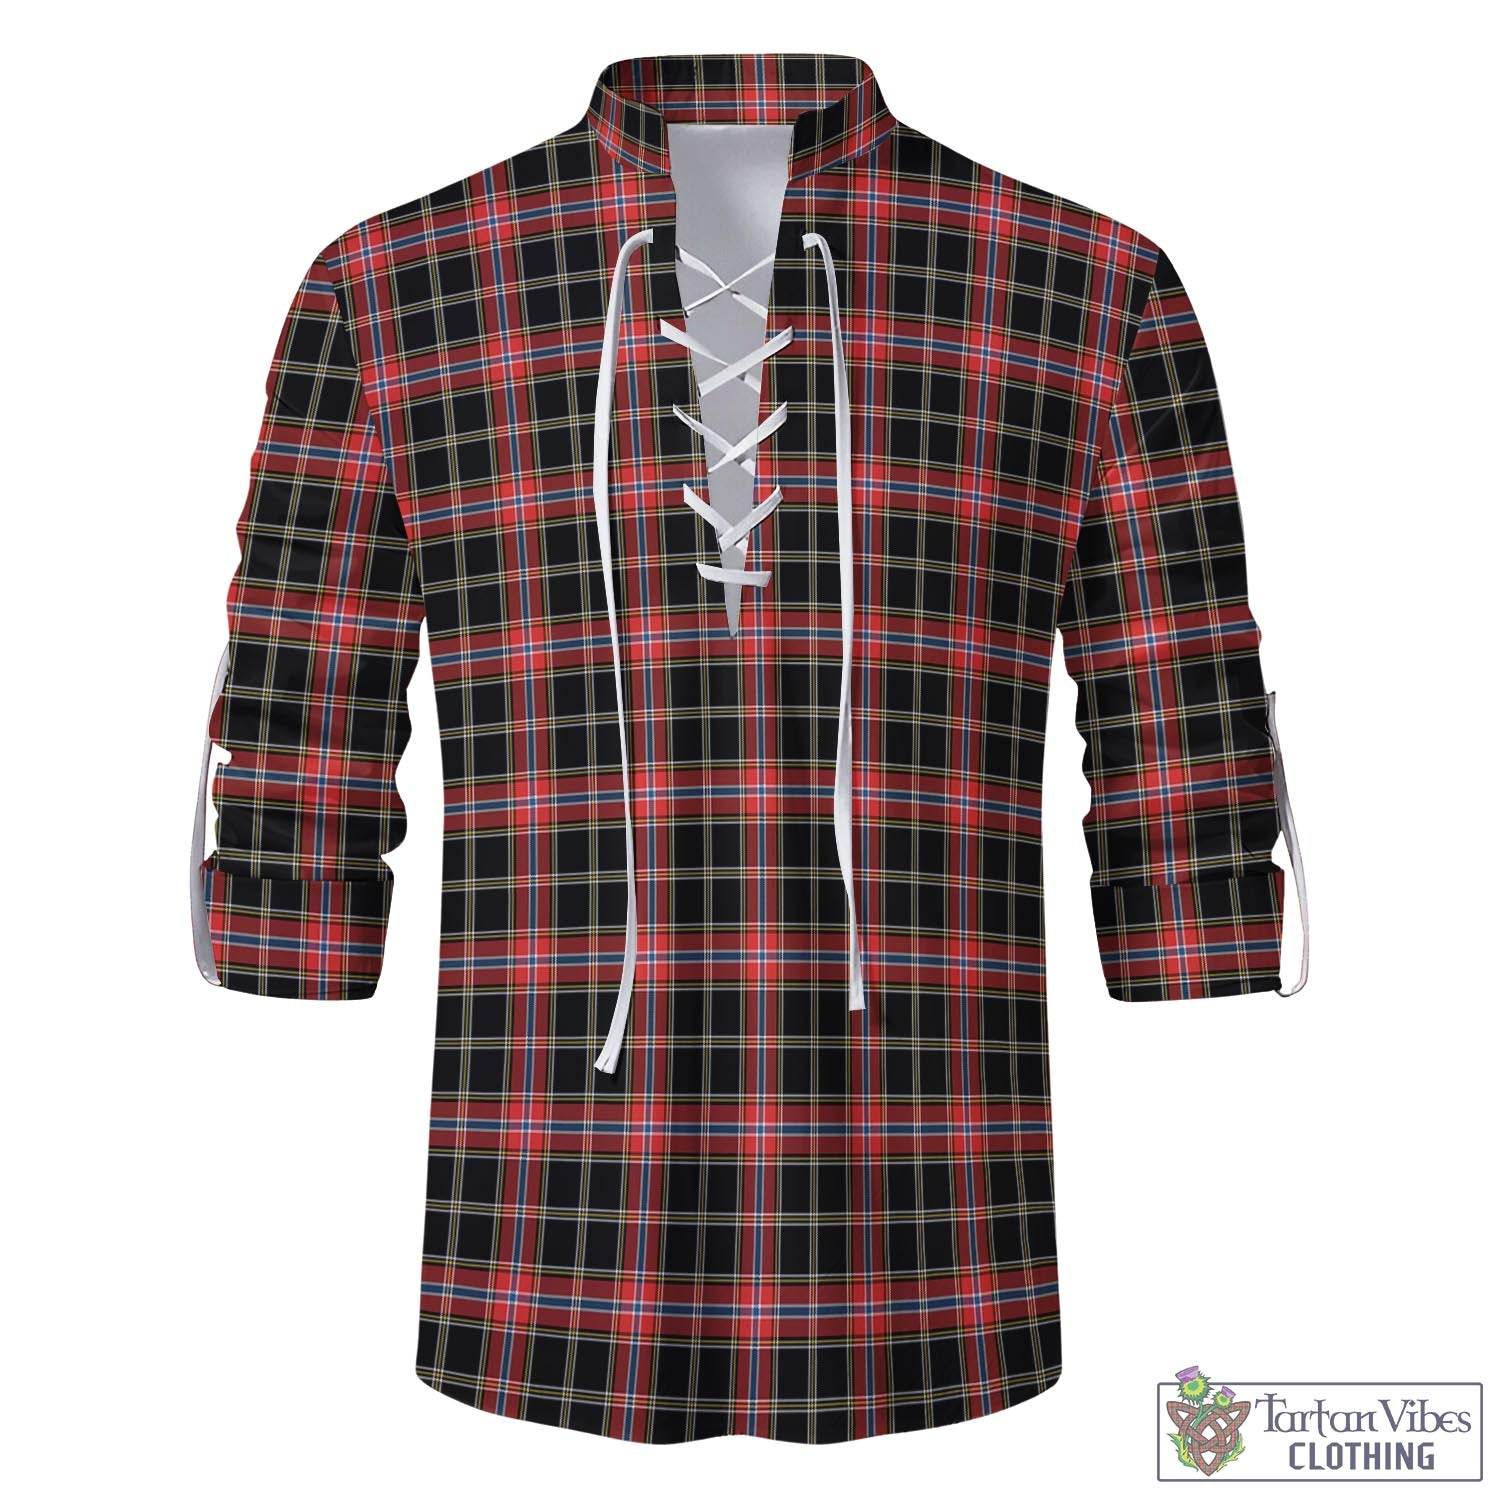 Tartan Vibes Clothing Norwegian Night Tartan Men's Scottish Traditional Jacobite Ghillie Kilt Shirt